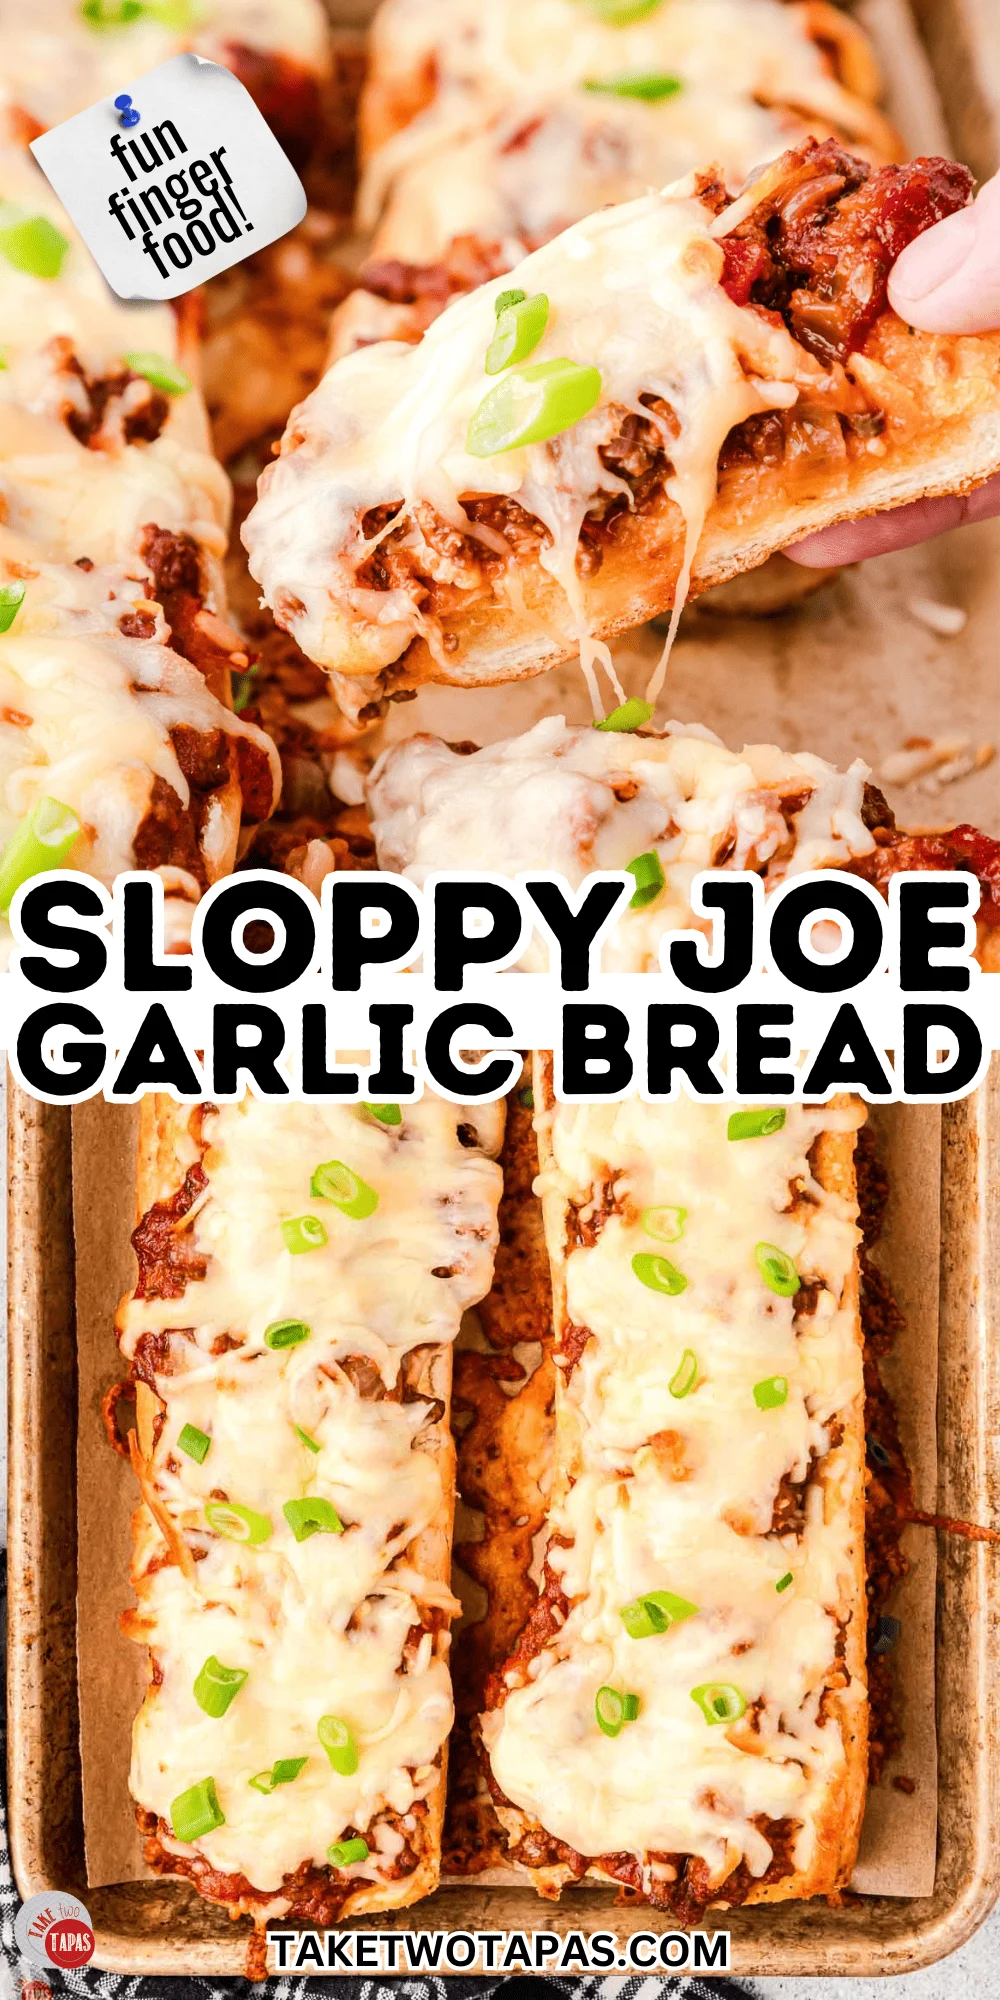 sloppy joe garlic bread is a fun and unique appetizer everyone will love